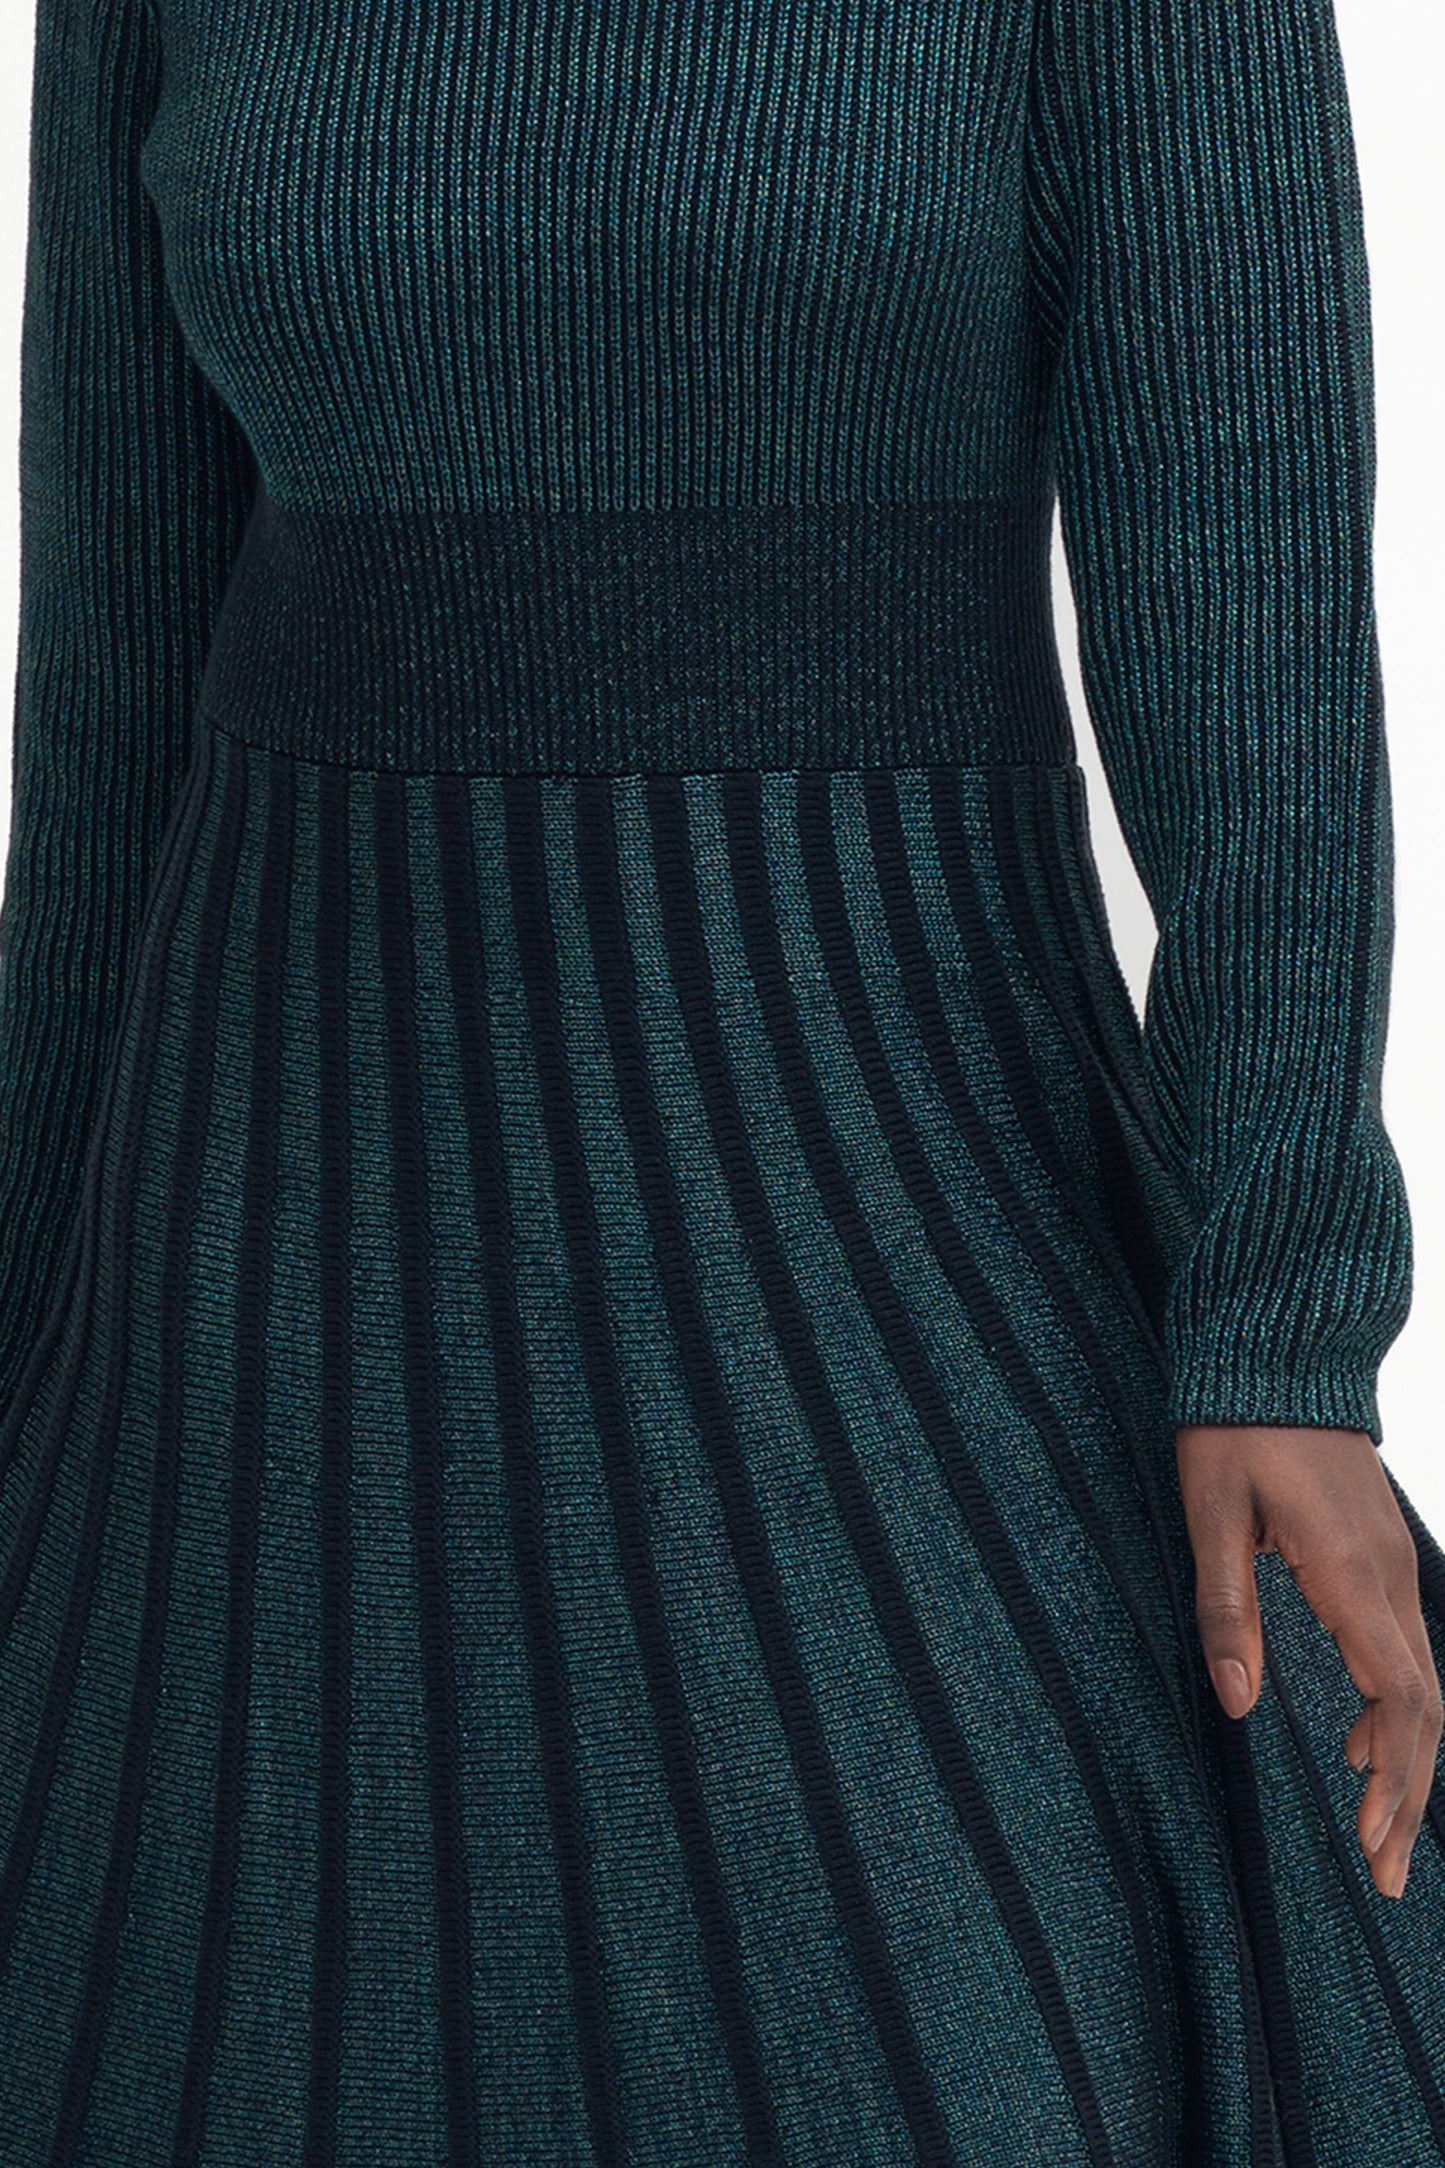 Glittra Lurex Knit Metallic Dress Model Front Detail | TEAL METALLIC